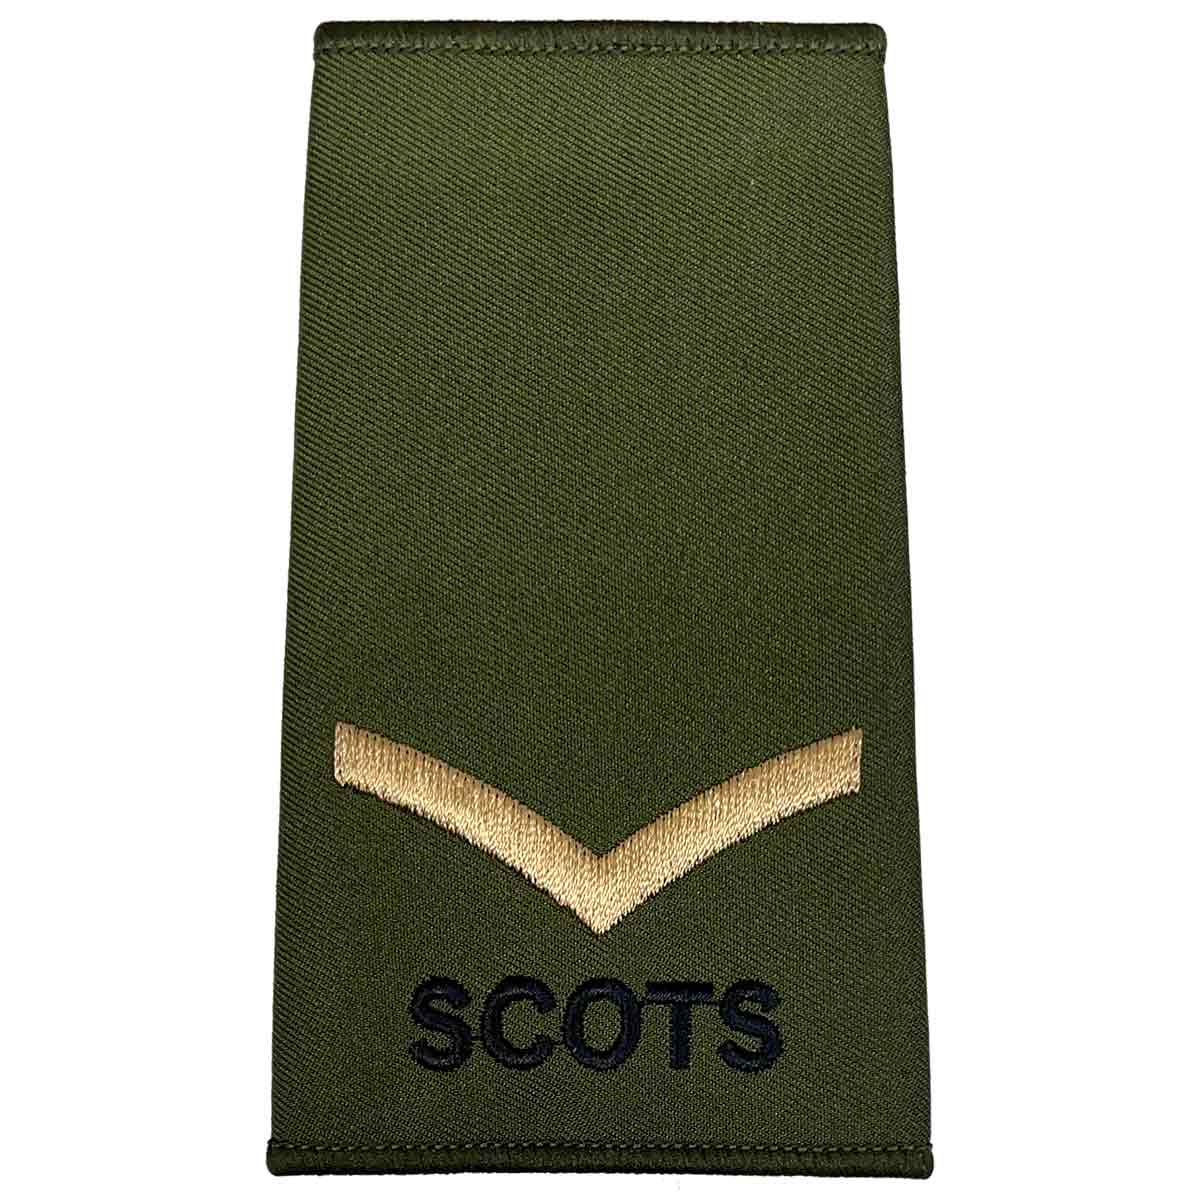 Royal Regiment of Scotland Olive Green Rank Slides (Pair) - John Bull Clothing